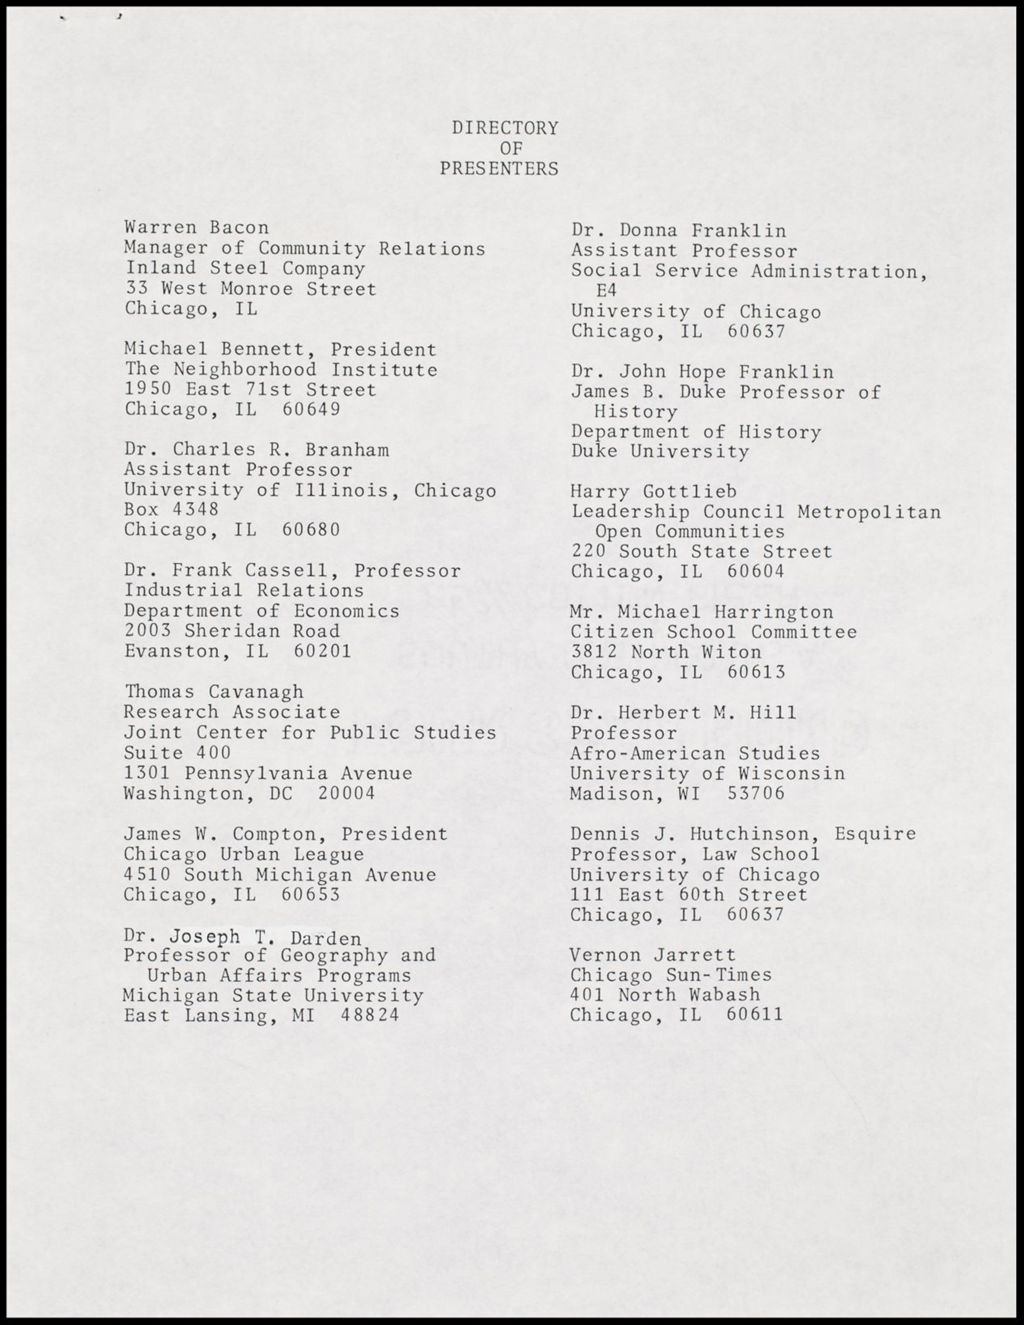 Miniature of Civil Rights Materials, 1984 (Folder III-2951)